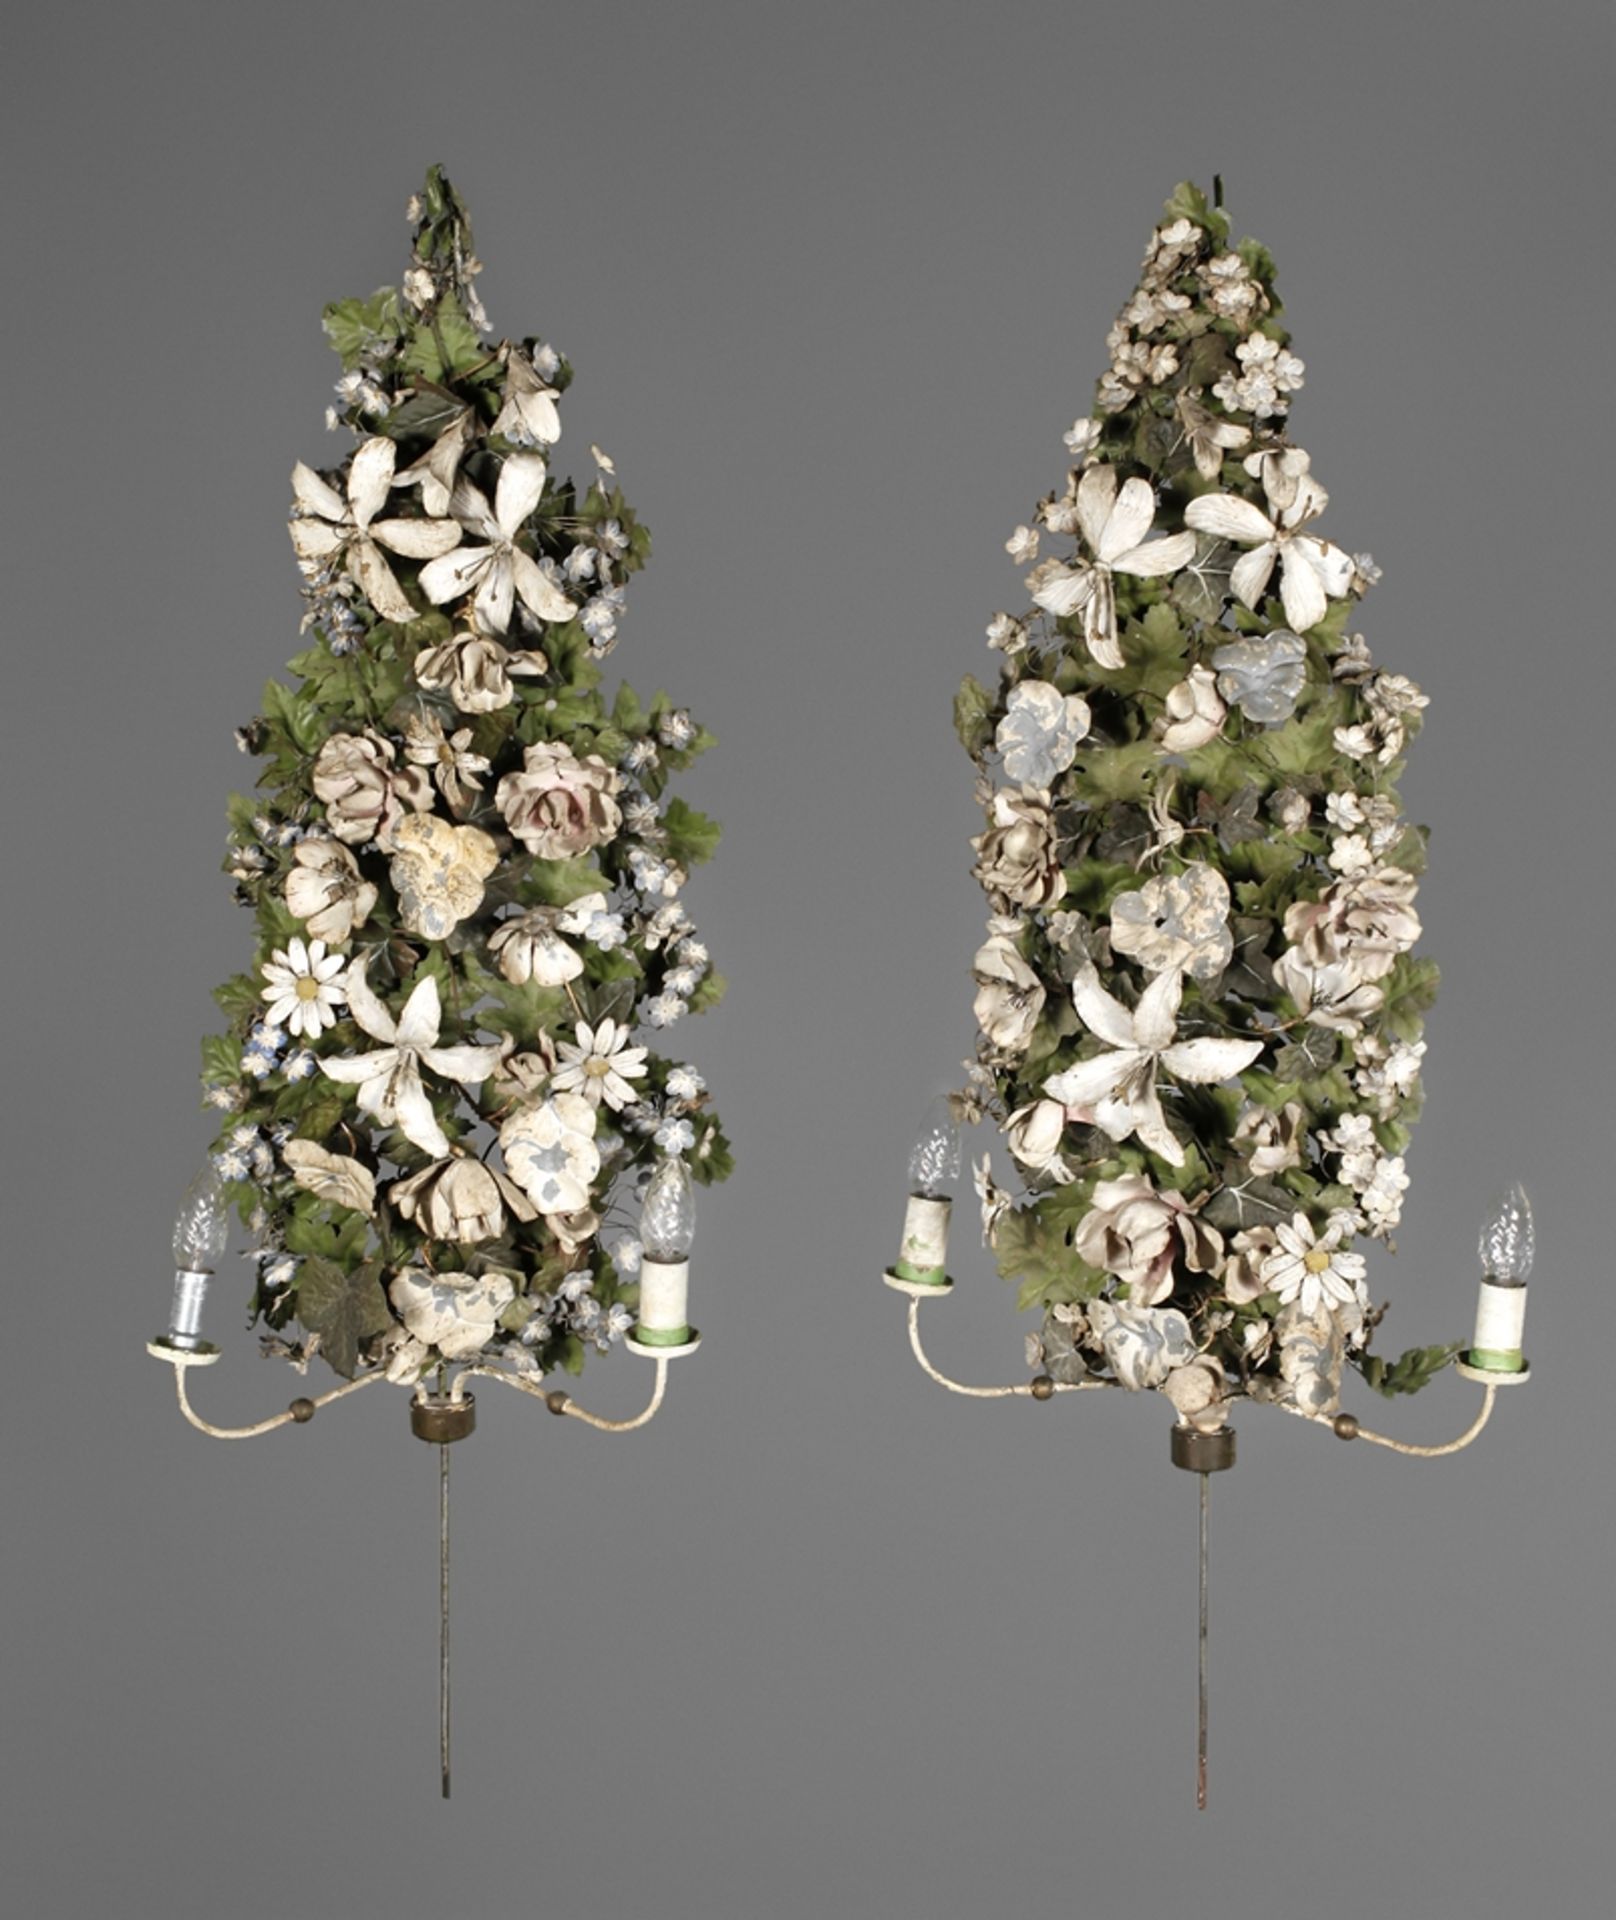 Paar florale WandlampenAnfang 20. Jh., Weißblech, mehrfarbig gefasst, ungewöhnliche Leuchten in Form